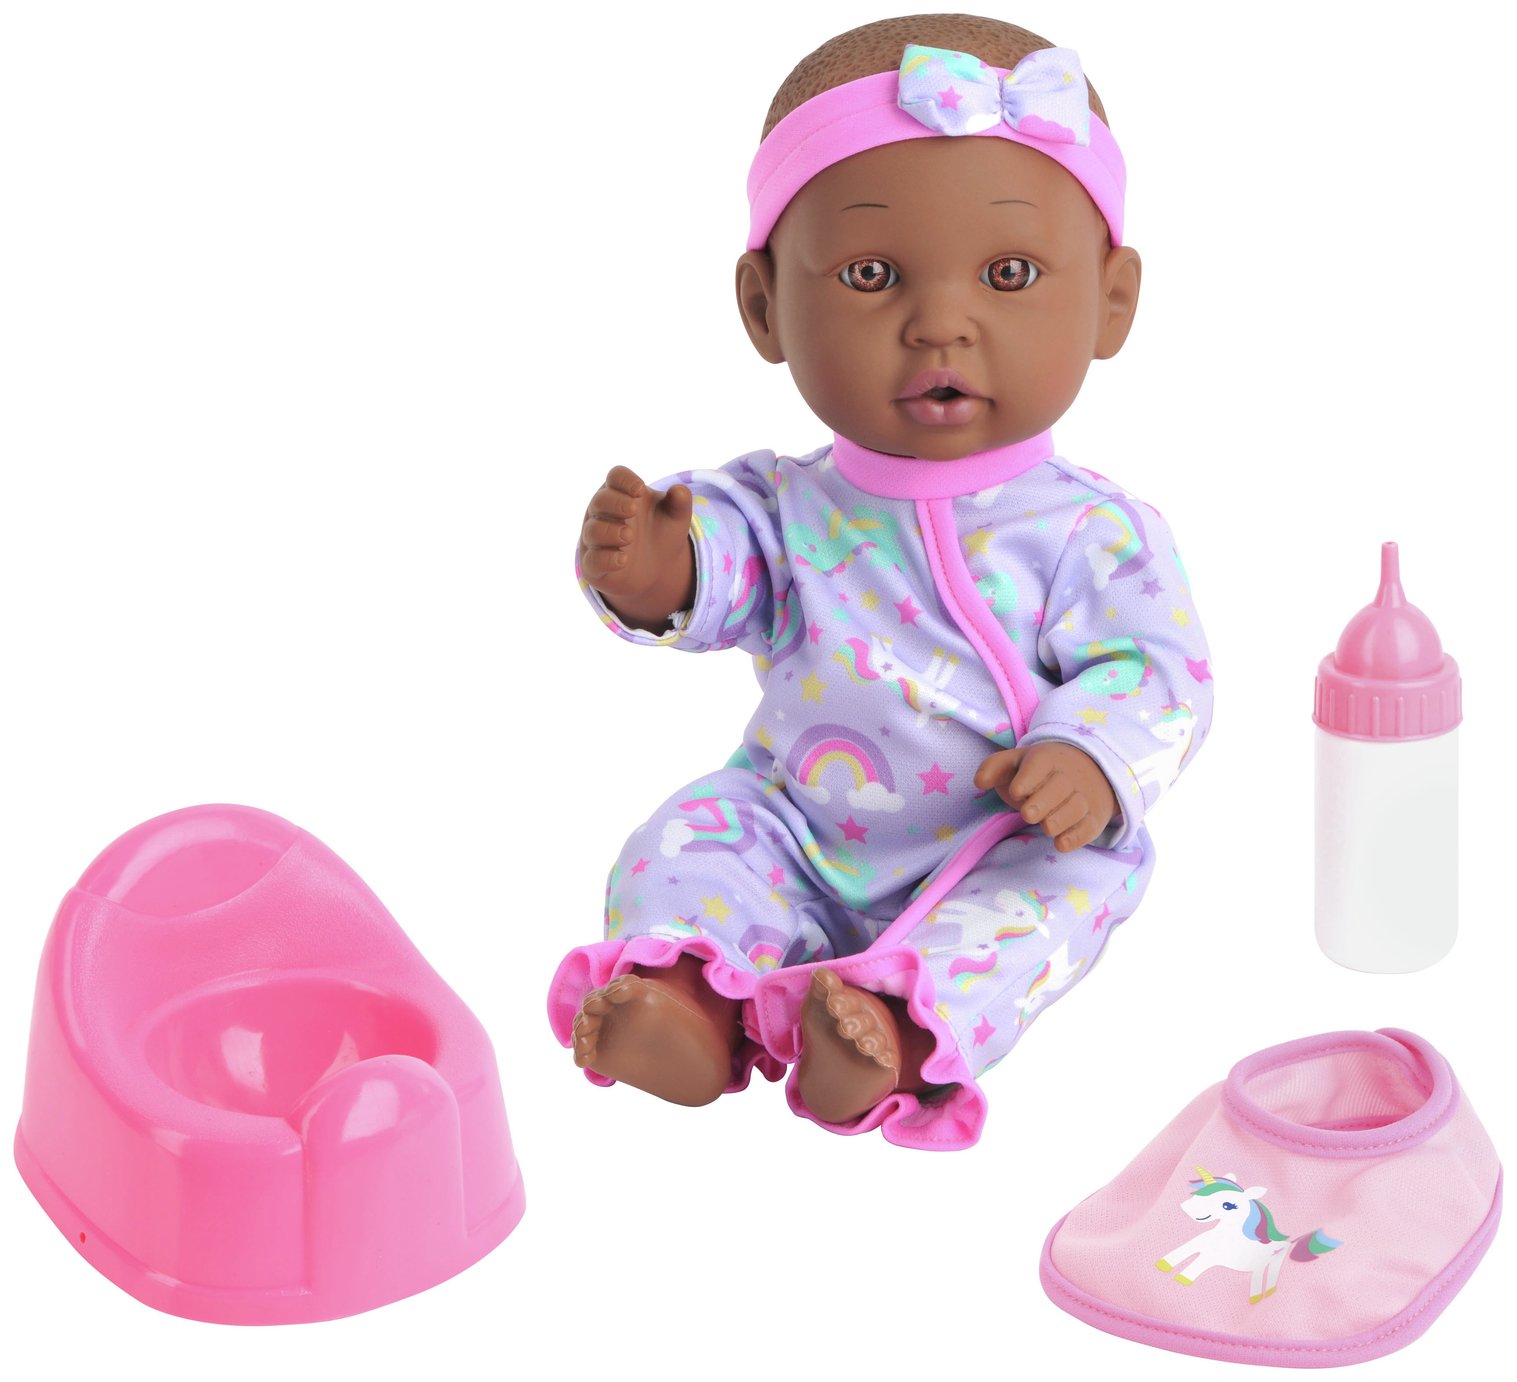 baby newborn doll clothes